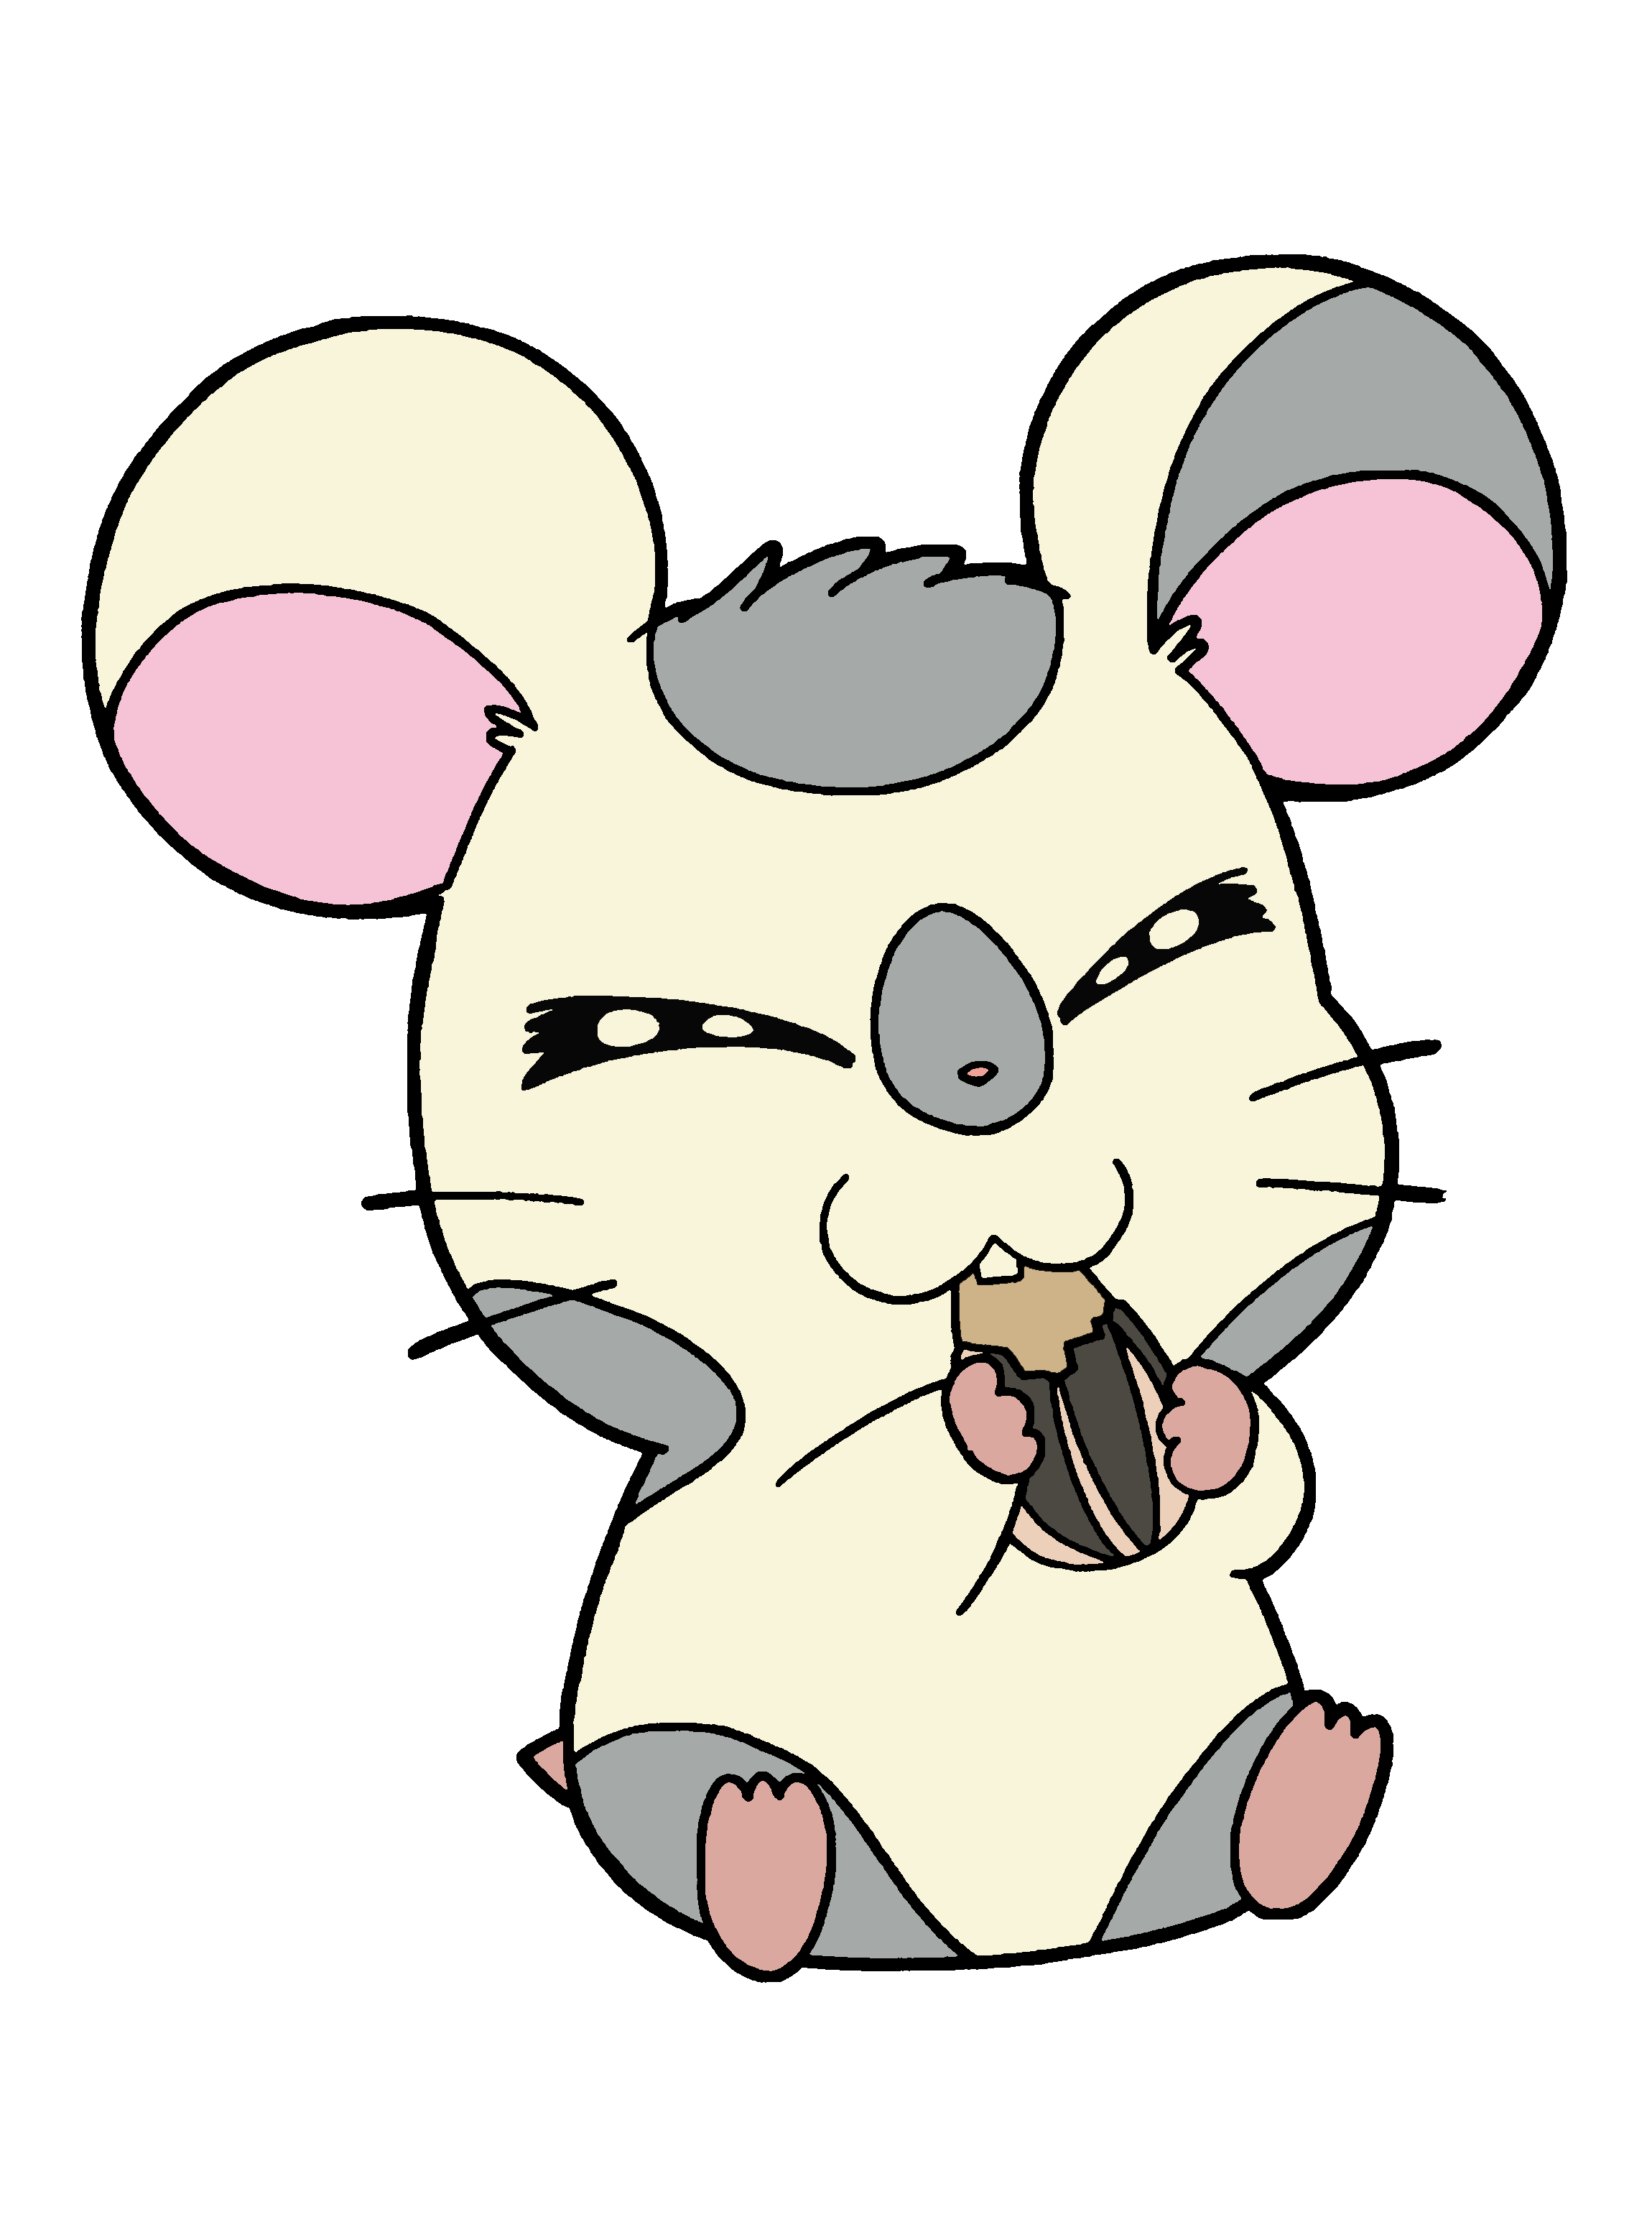 Oxnard the hamtaro wiki. Hamster clipart dead